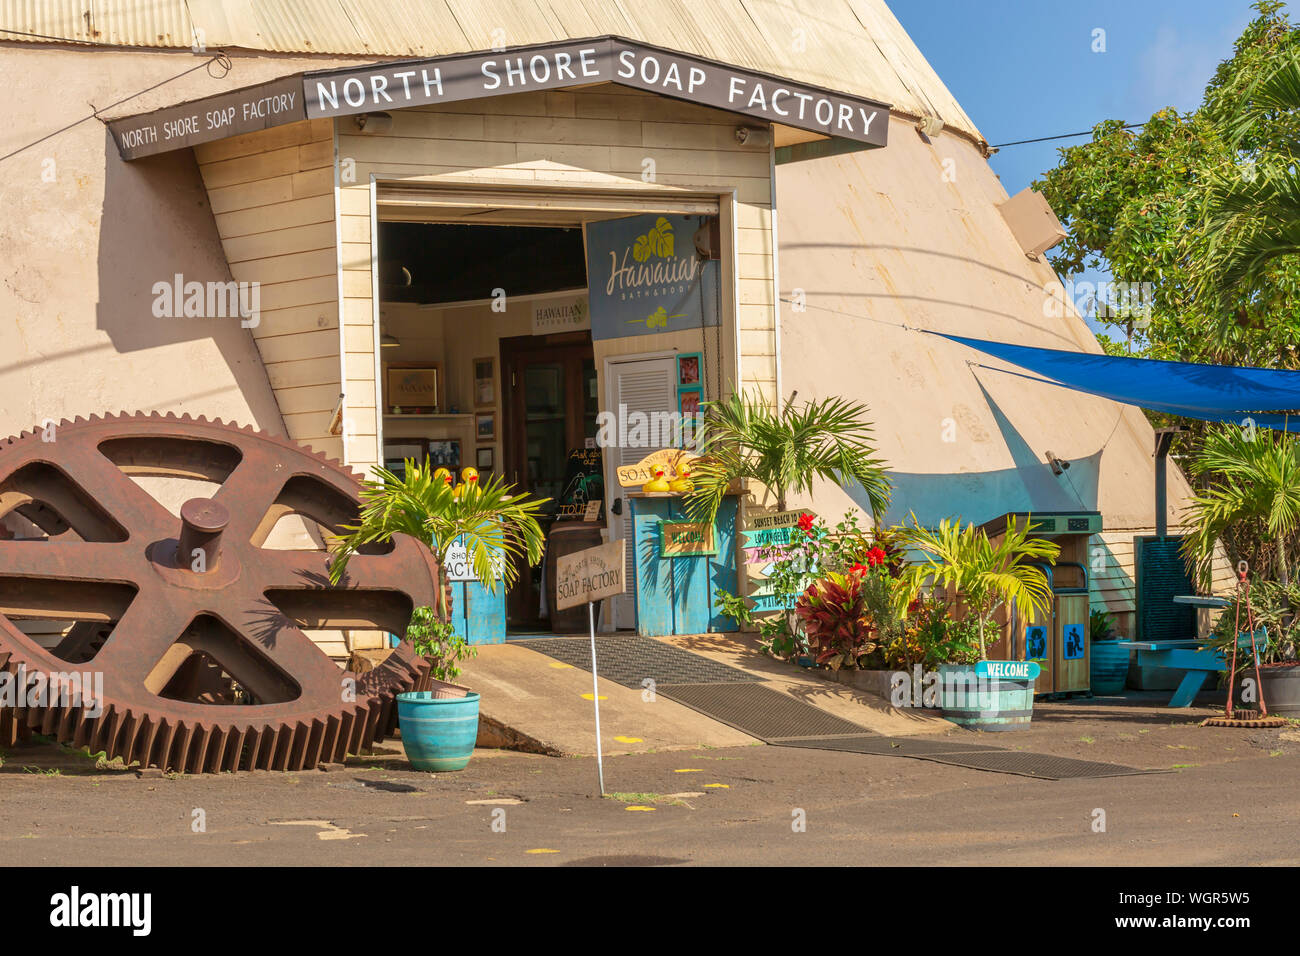 North Shore d'Oahu Hawaii entrée de l'usine de savon Banque D'Images